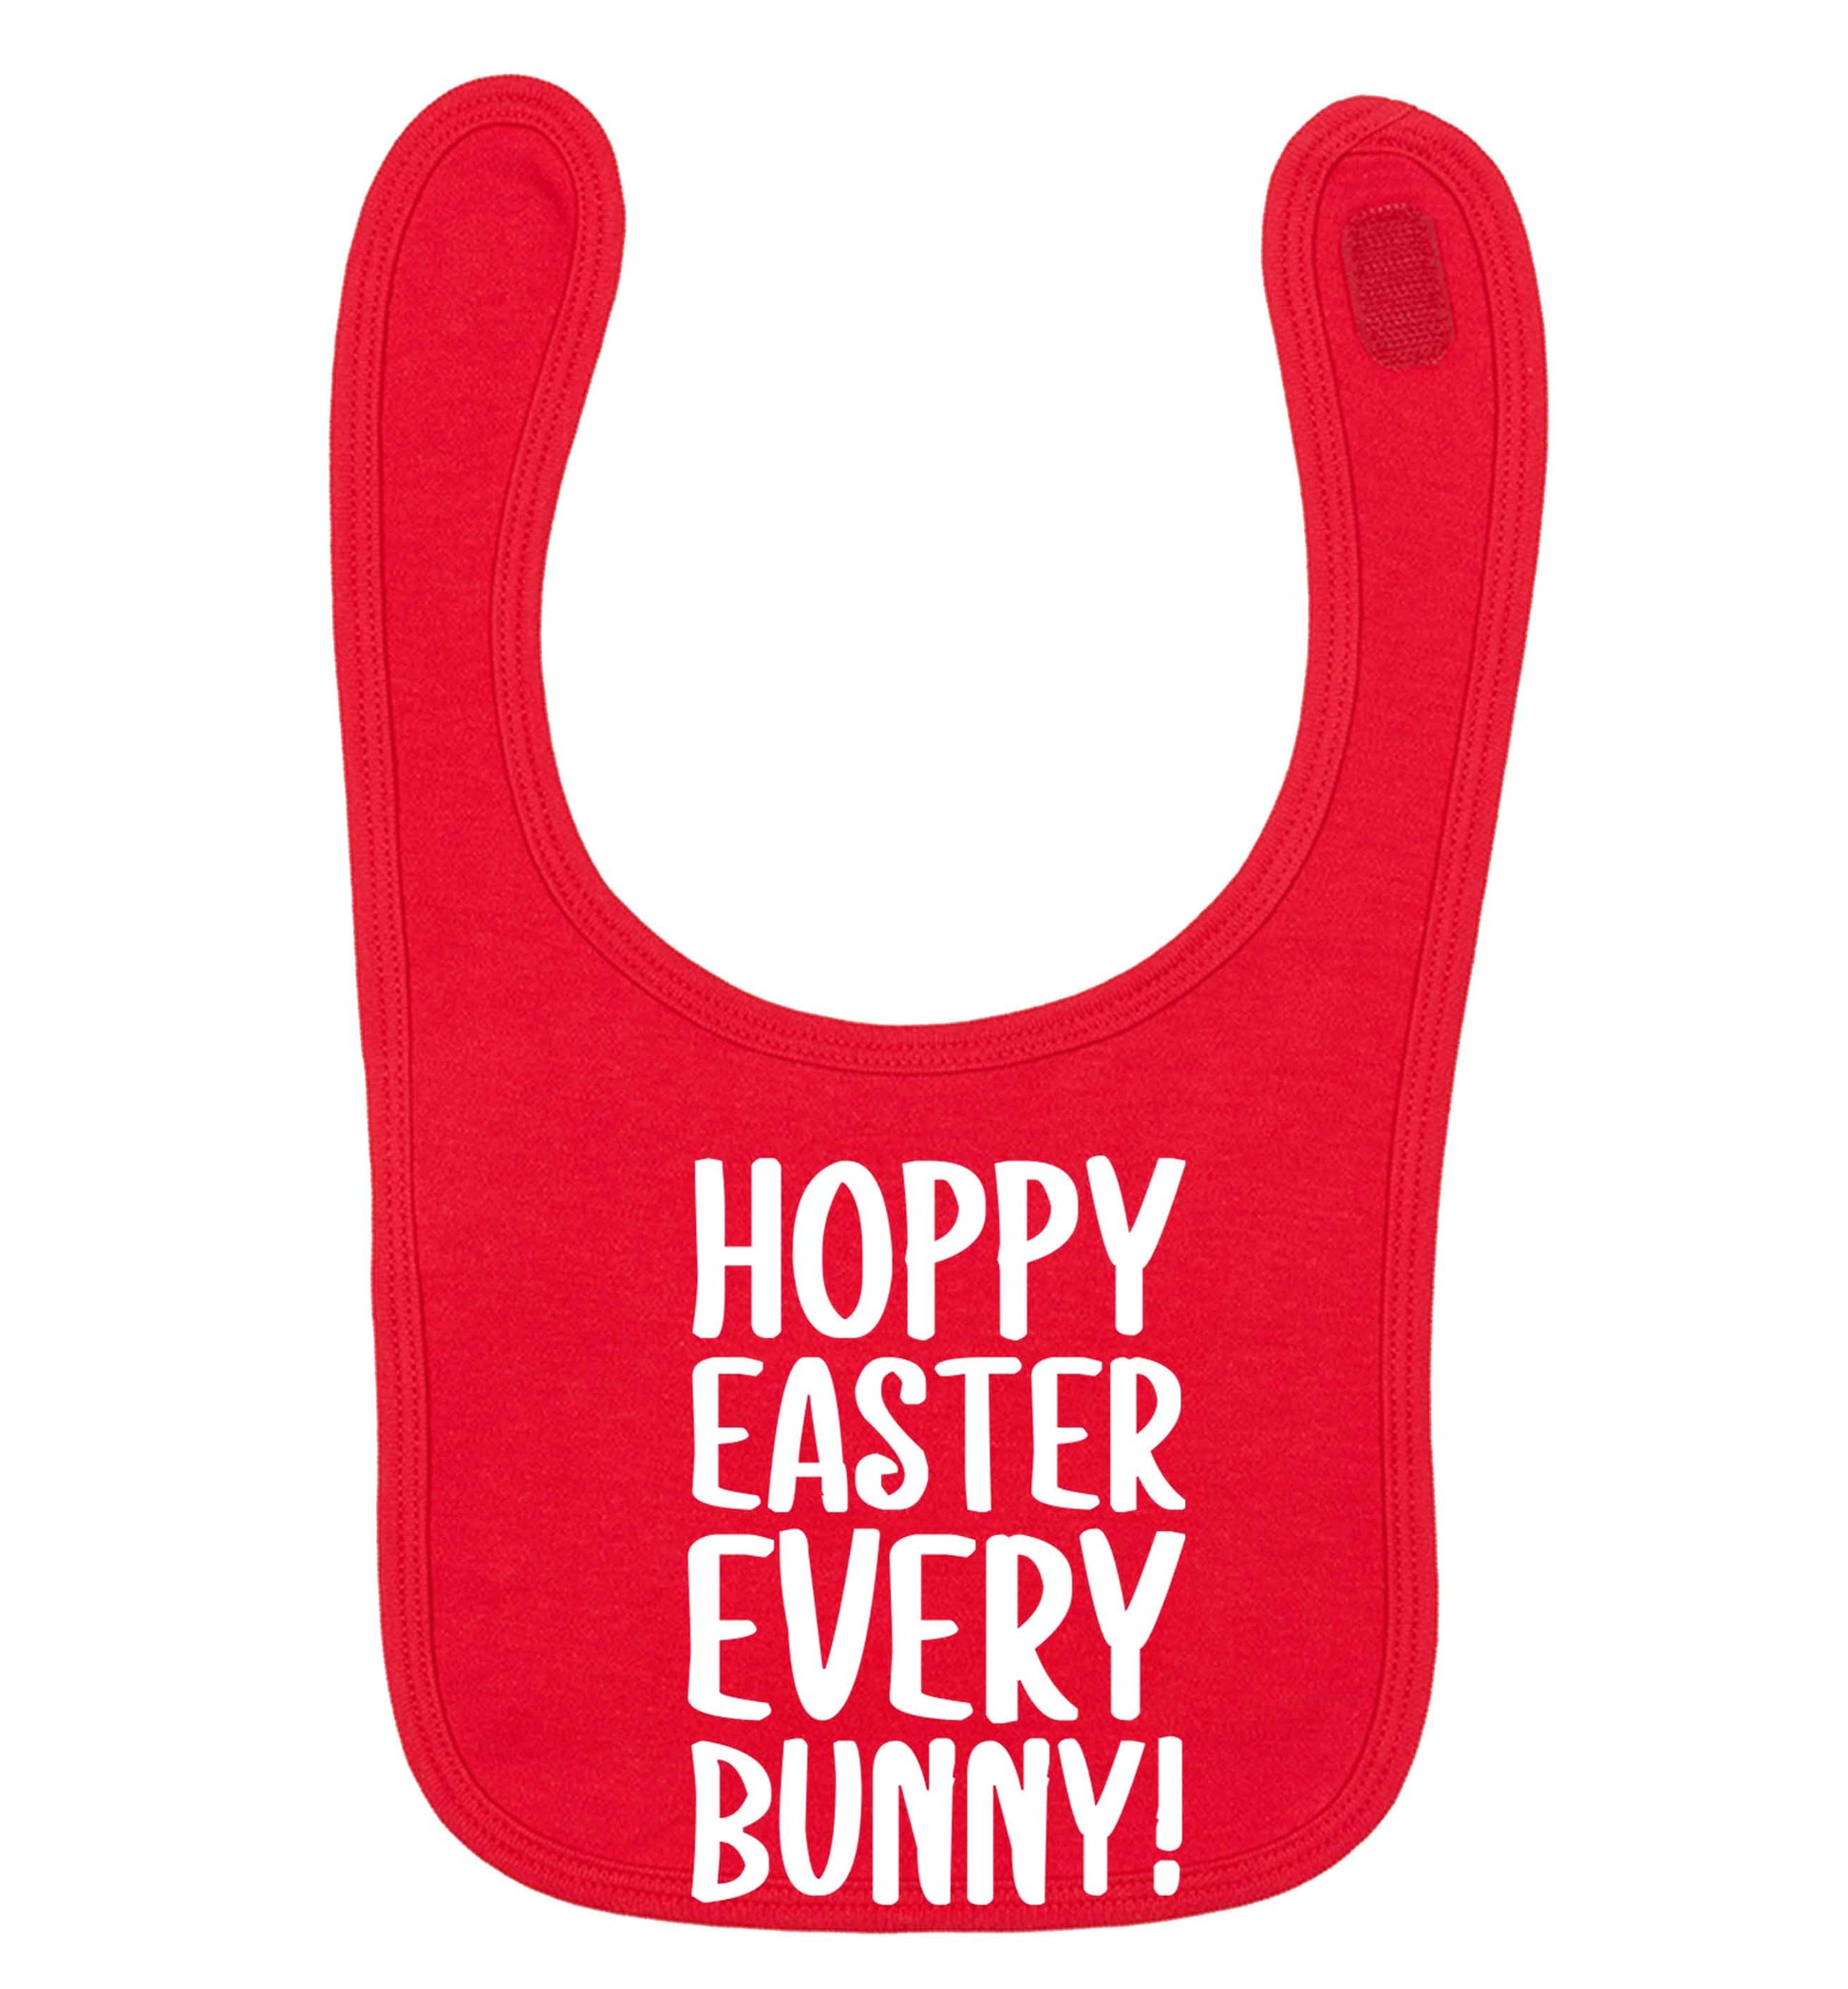 Hoppy Easter every bunny! red baby bib